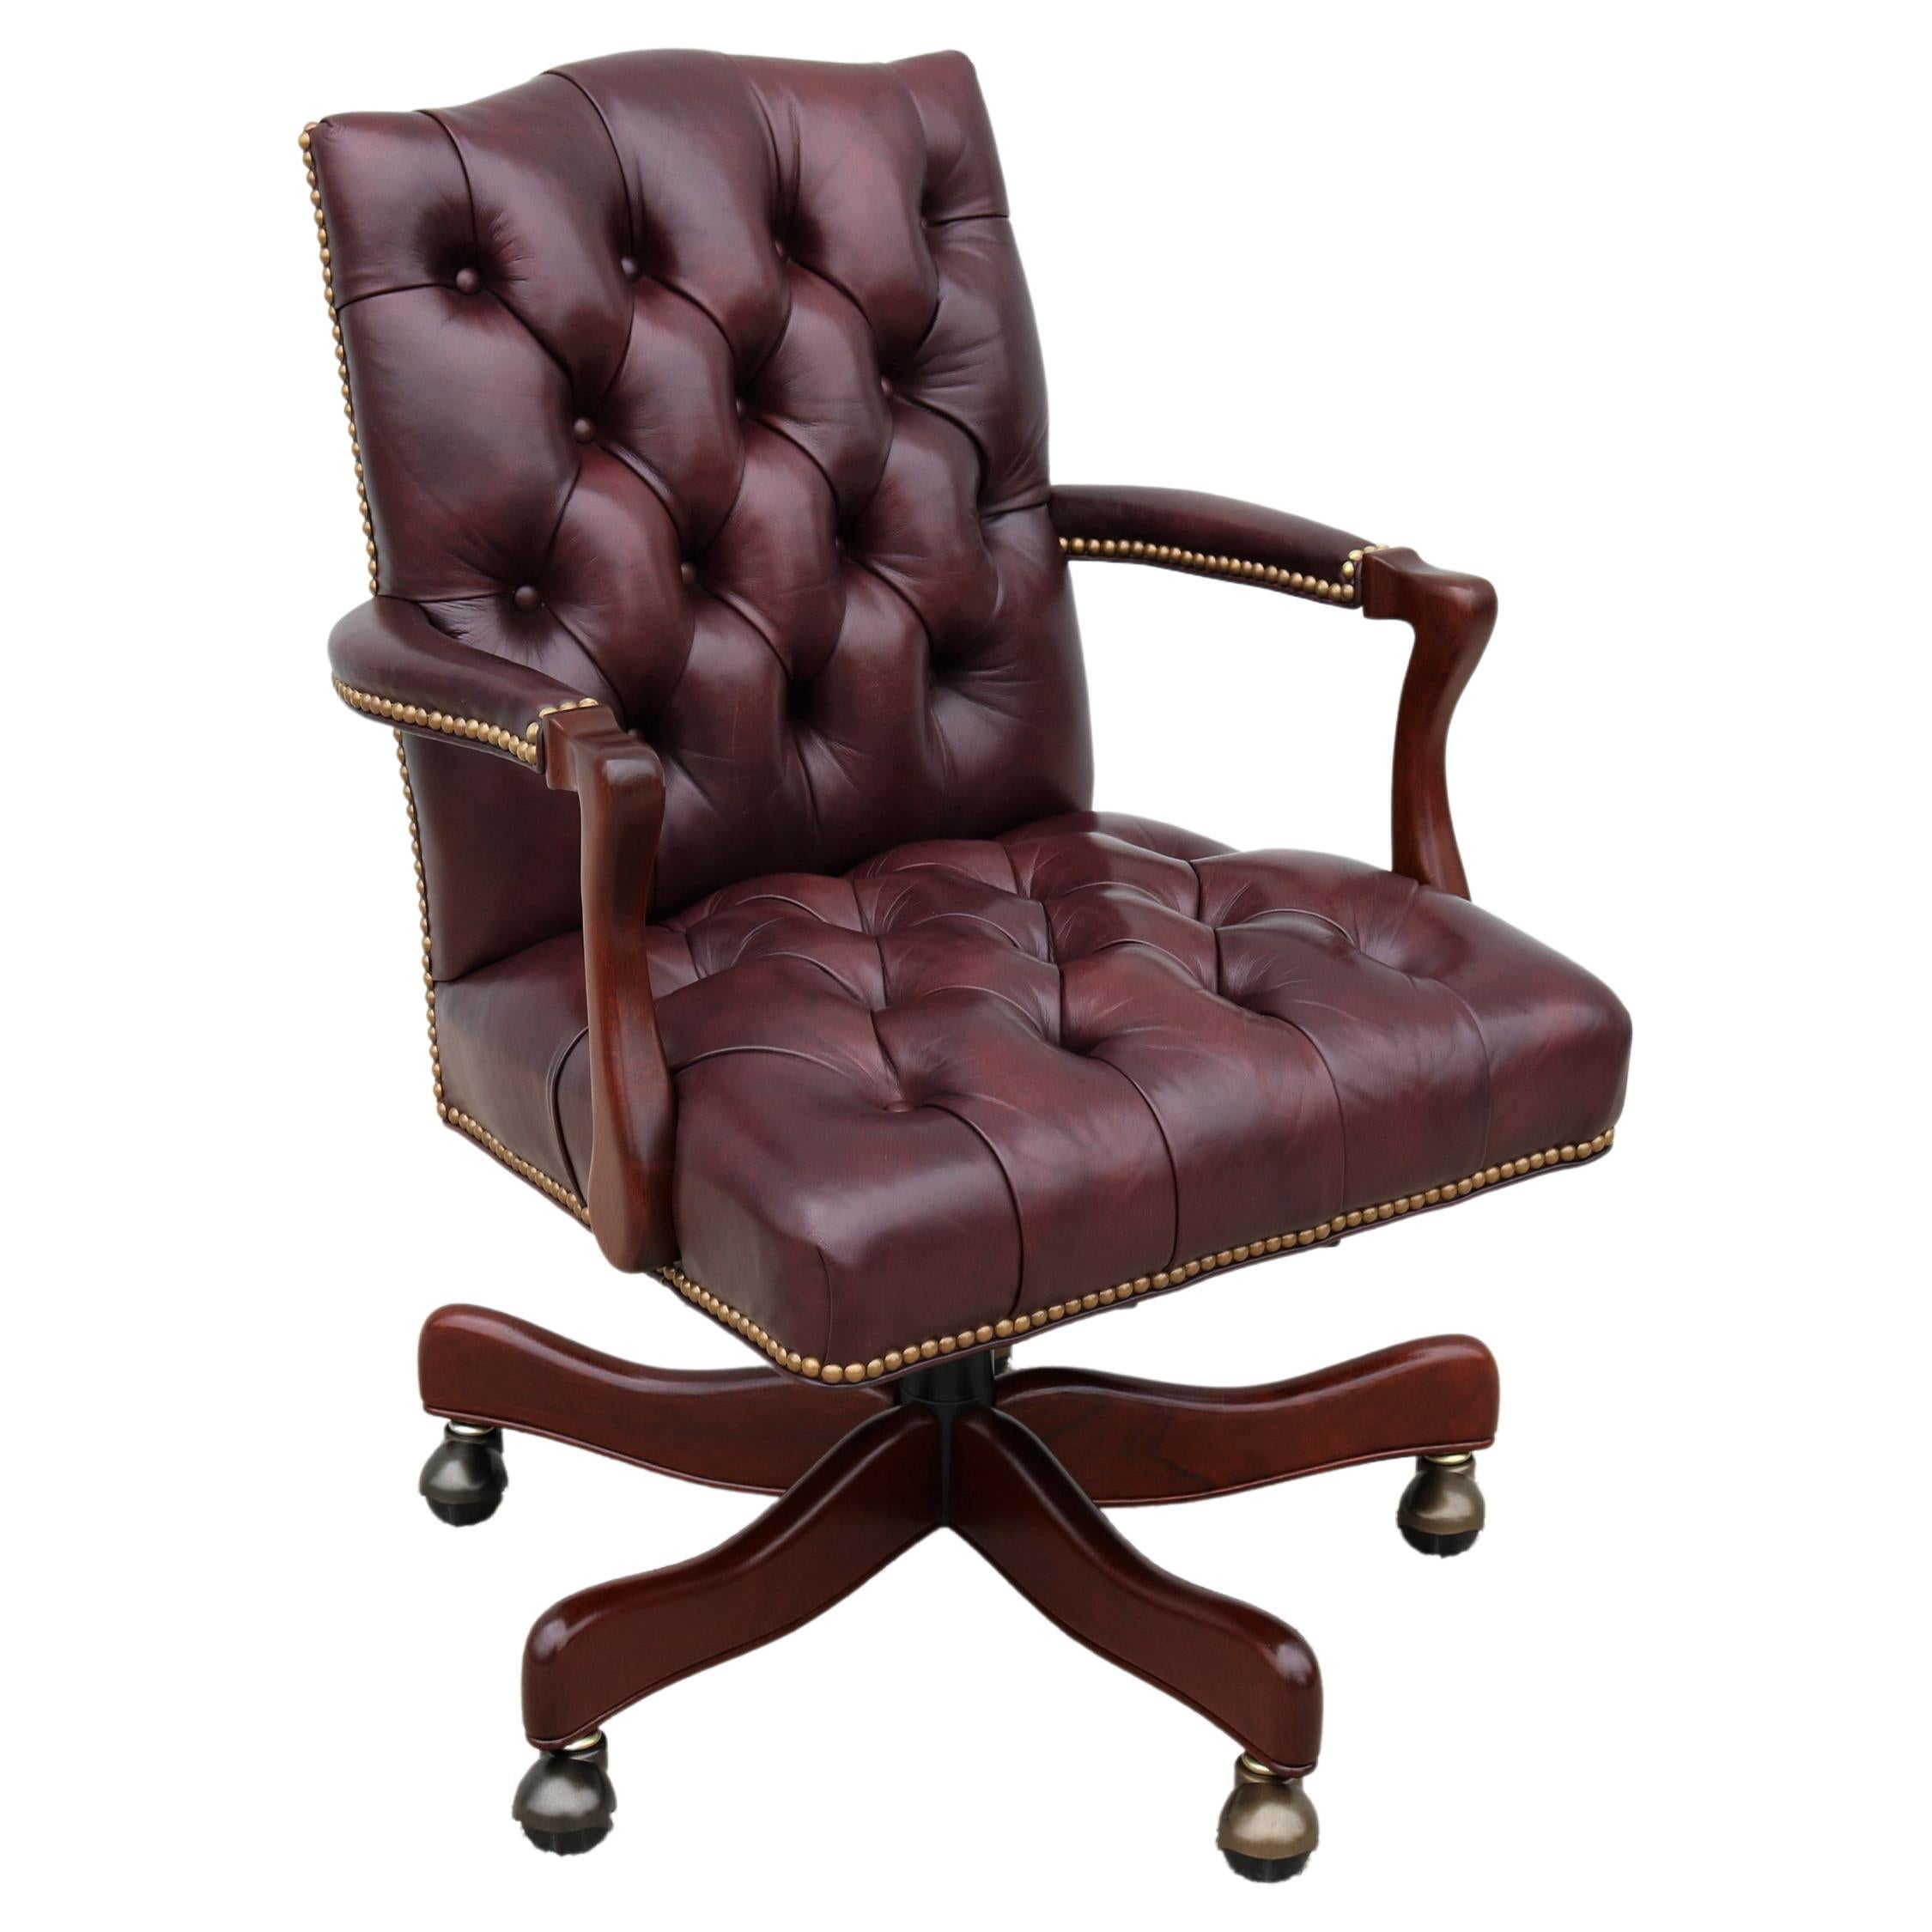 Classic Cabot Wrenn Graham Tufted Burgundy Leather Executive Swivel Desk Chair For Sale